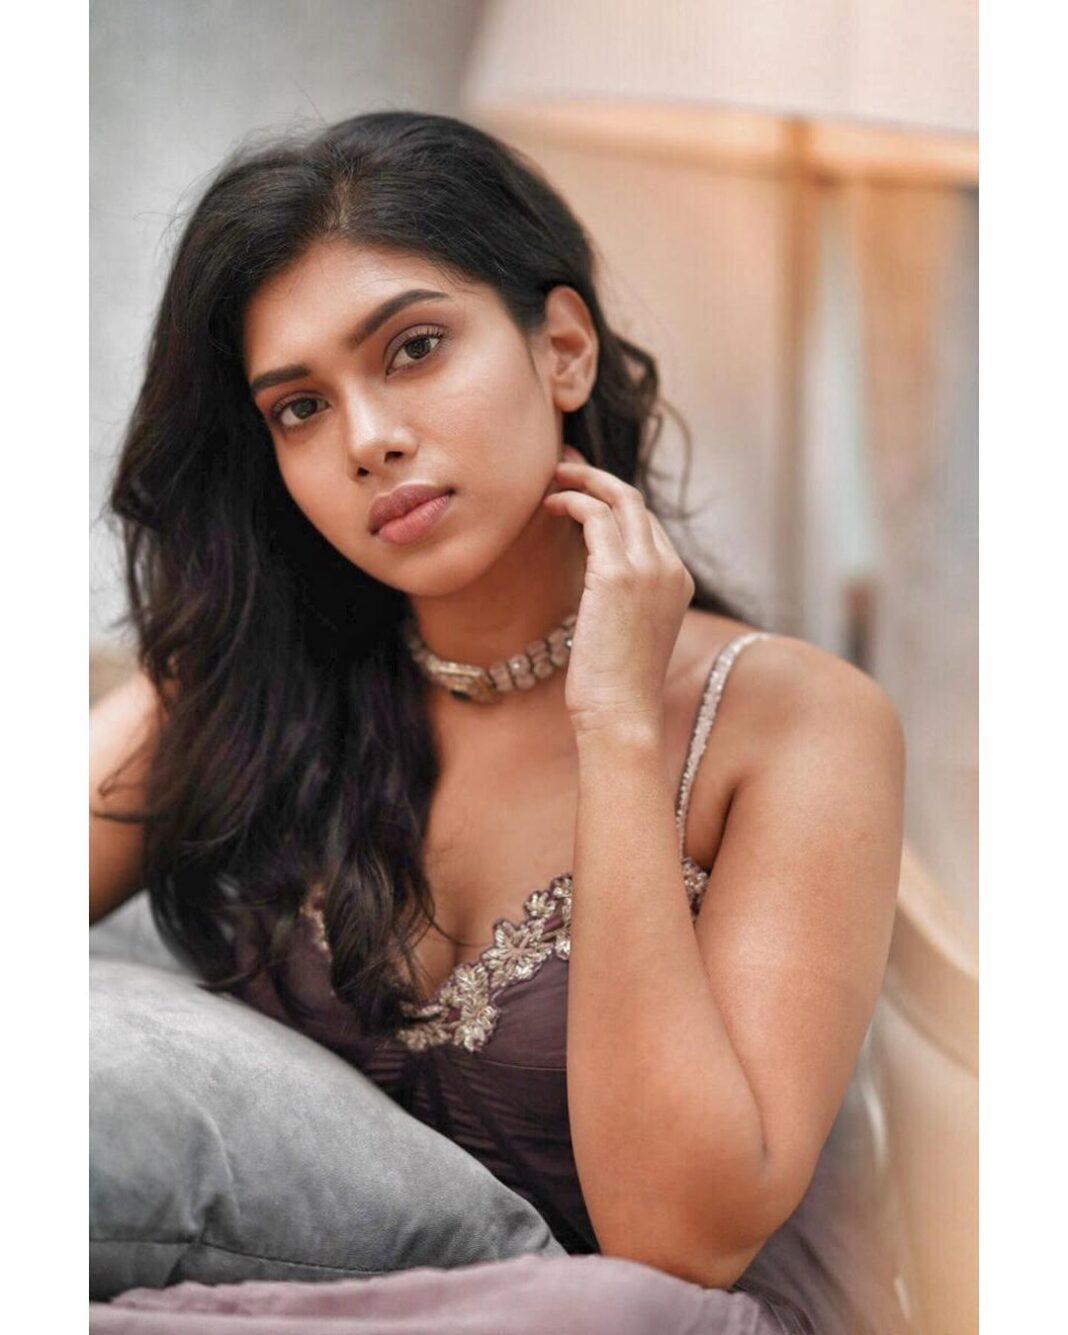 Dushara Vijayan Instagram - Shot by : @karthiksippy Outfit : @bandananarulaofficial Styling : @dushara_vijayan Makeup : @thewhimsicalbrushe Hair : @puii_c_ammy Accessories : @rimliboutique Location : @fikachennai www.dusharaofficial.com #dusharaofficial #actor #actress #model #indianmodel #indianactor #indianactress #fashion #design #photoshoot #indian #southindian #stylist #makeup #artist #fashionmodel #style #modeling Fika Chennai